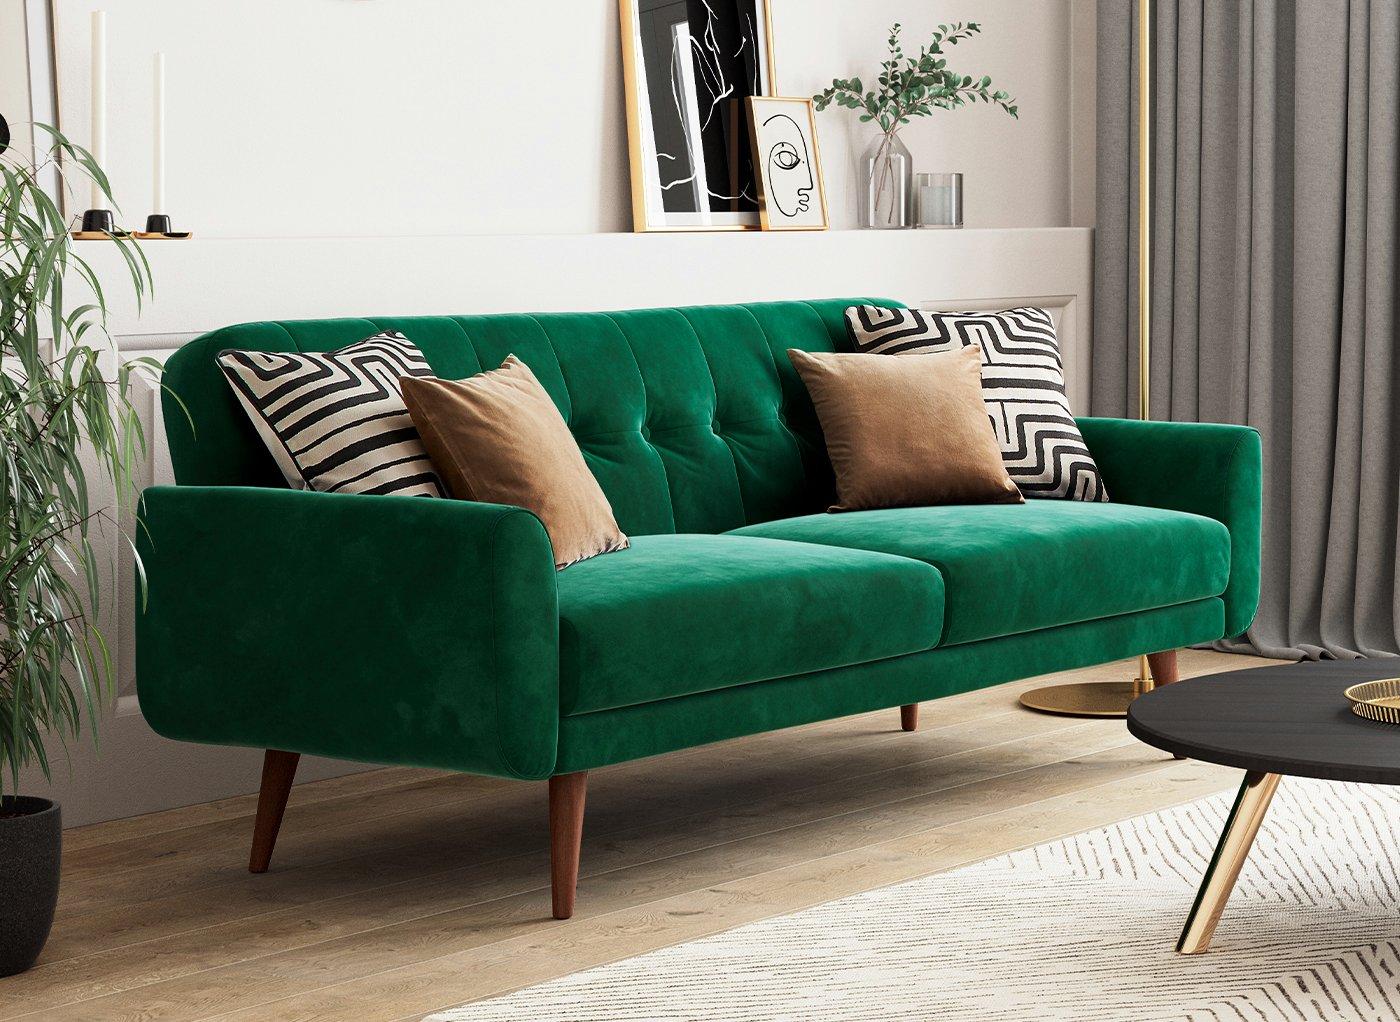 green loveseat sofa bed